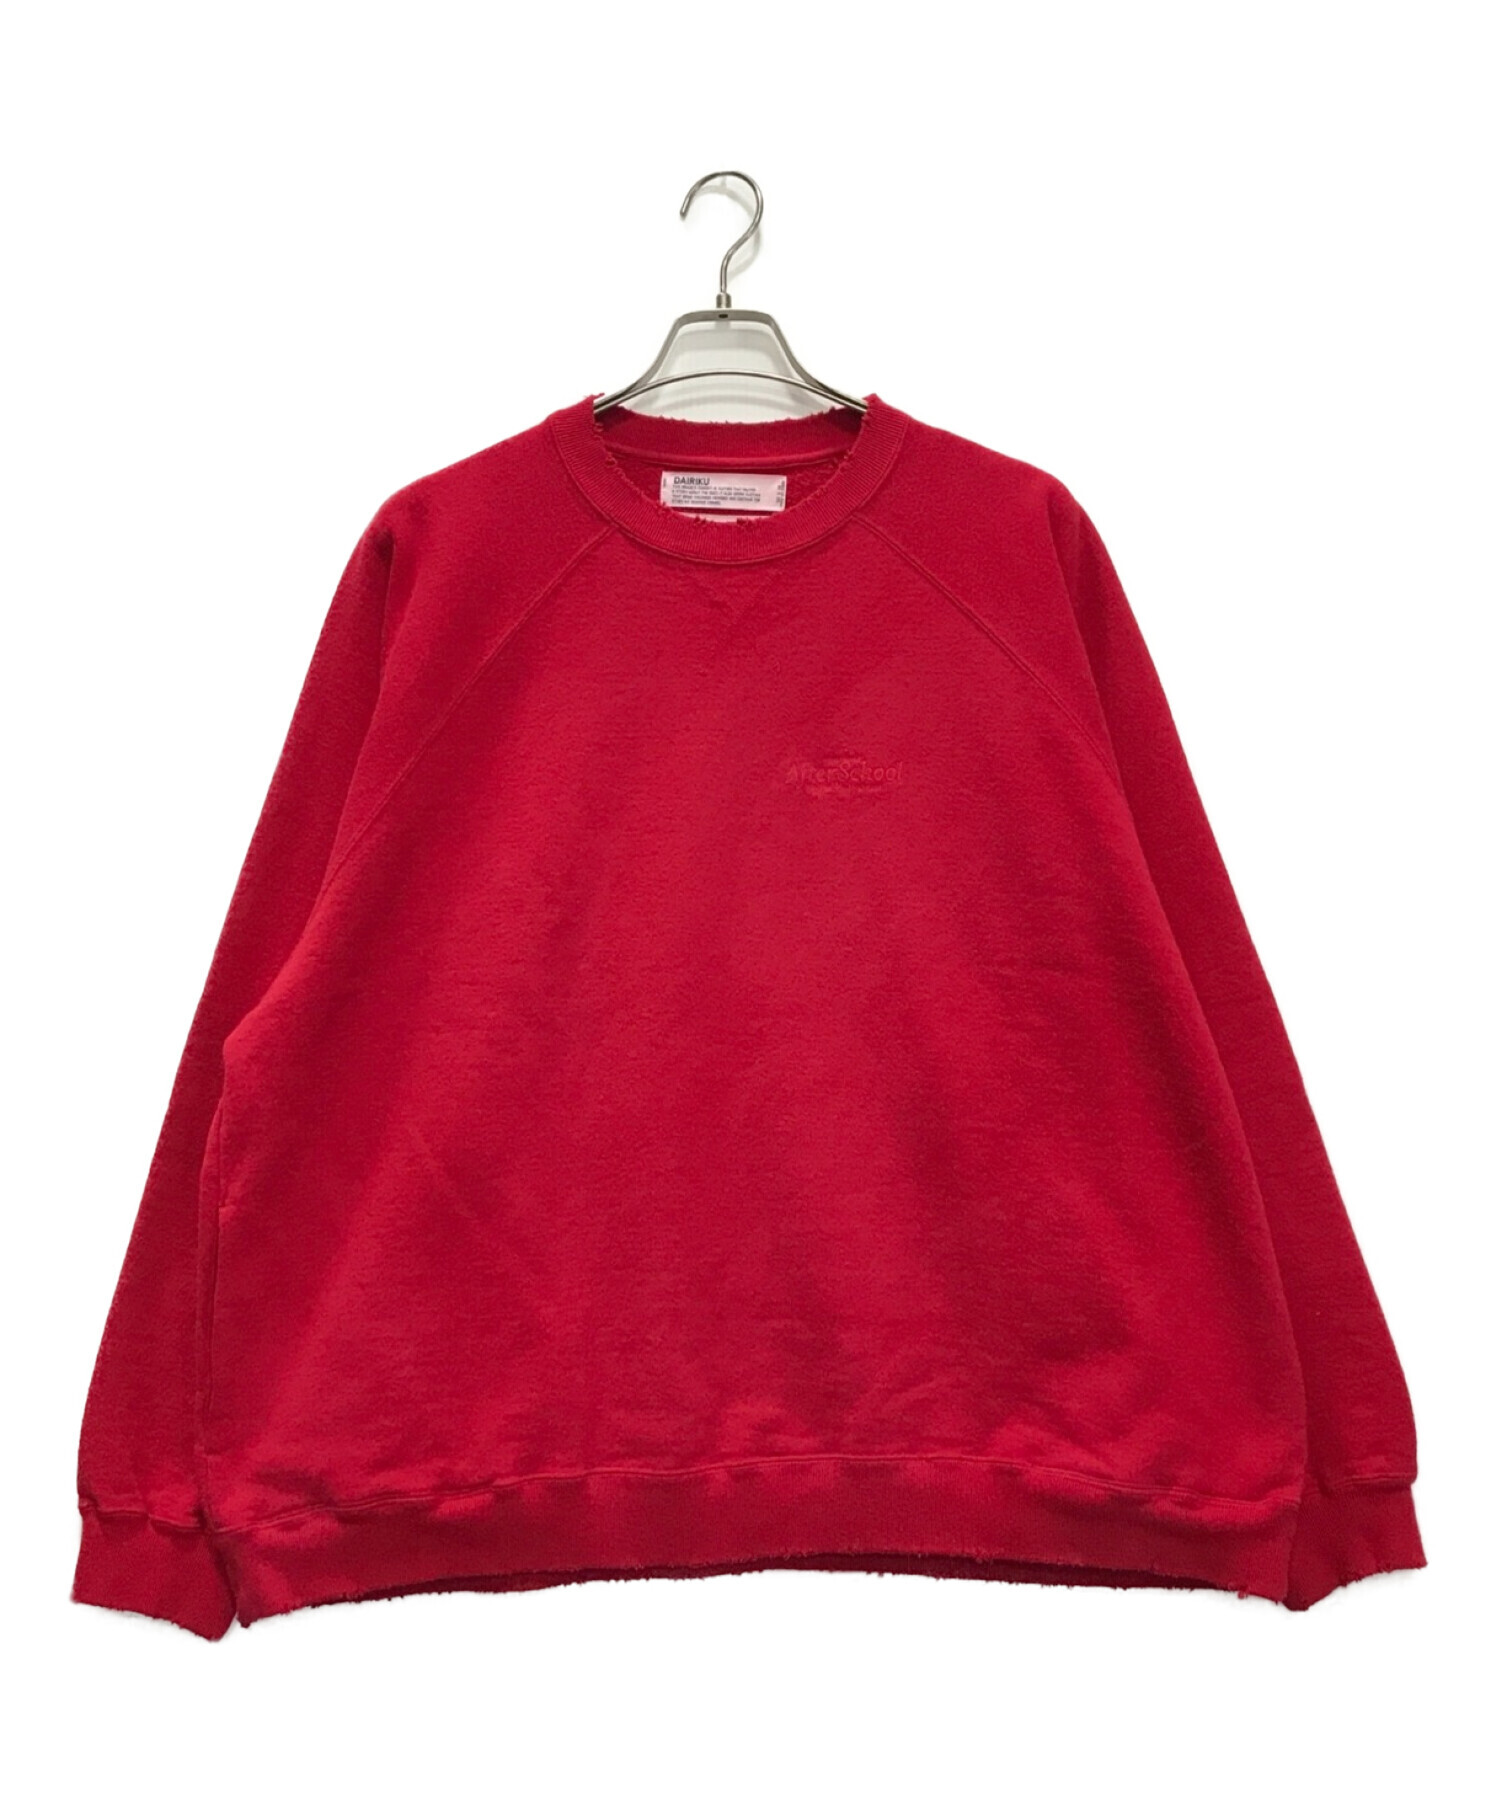 DAIRIKU (ダイリク) Water-repellent Pullover Sweater レッド サイズ:M